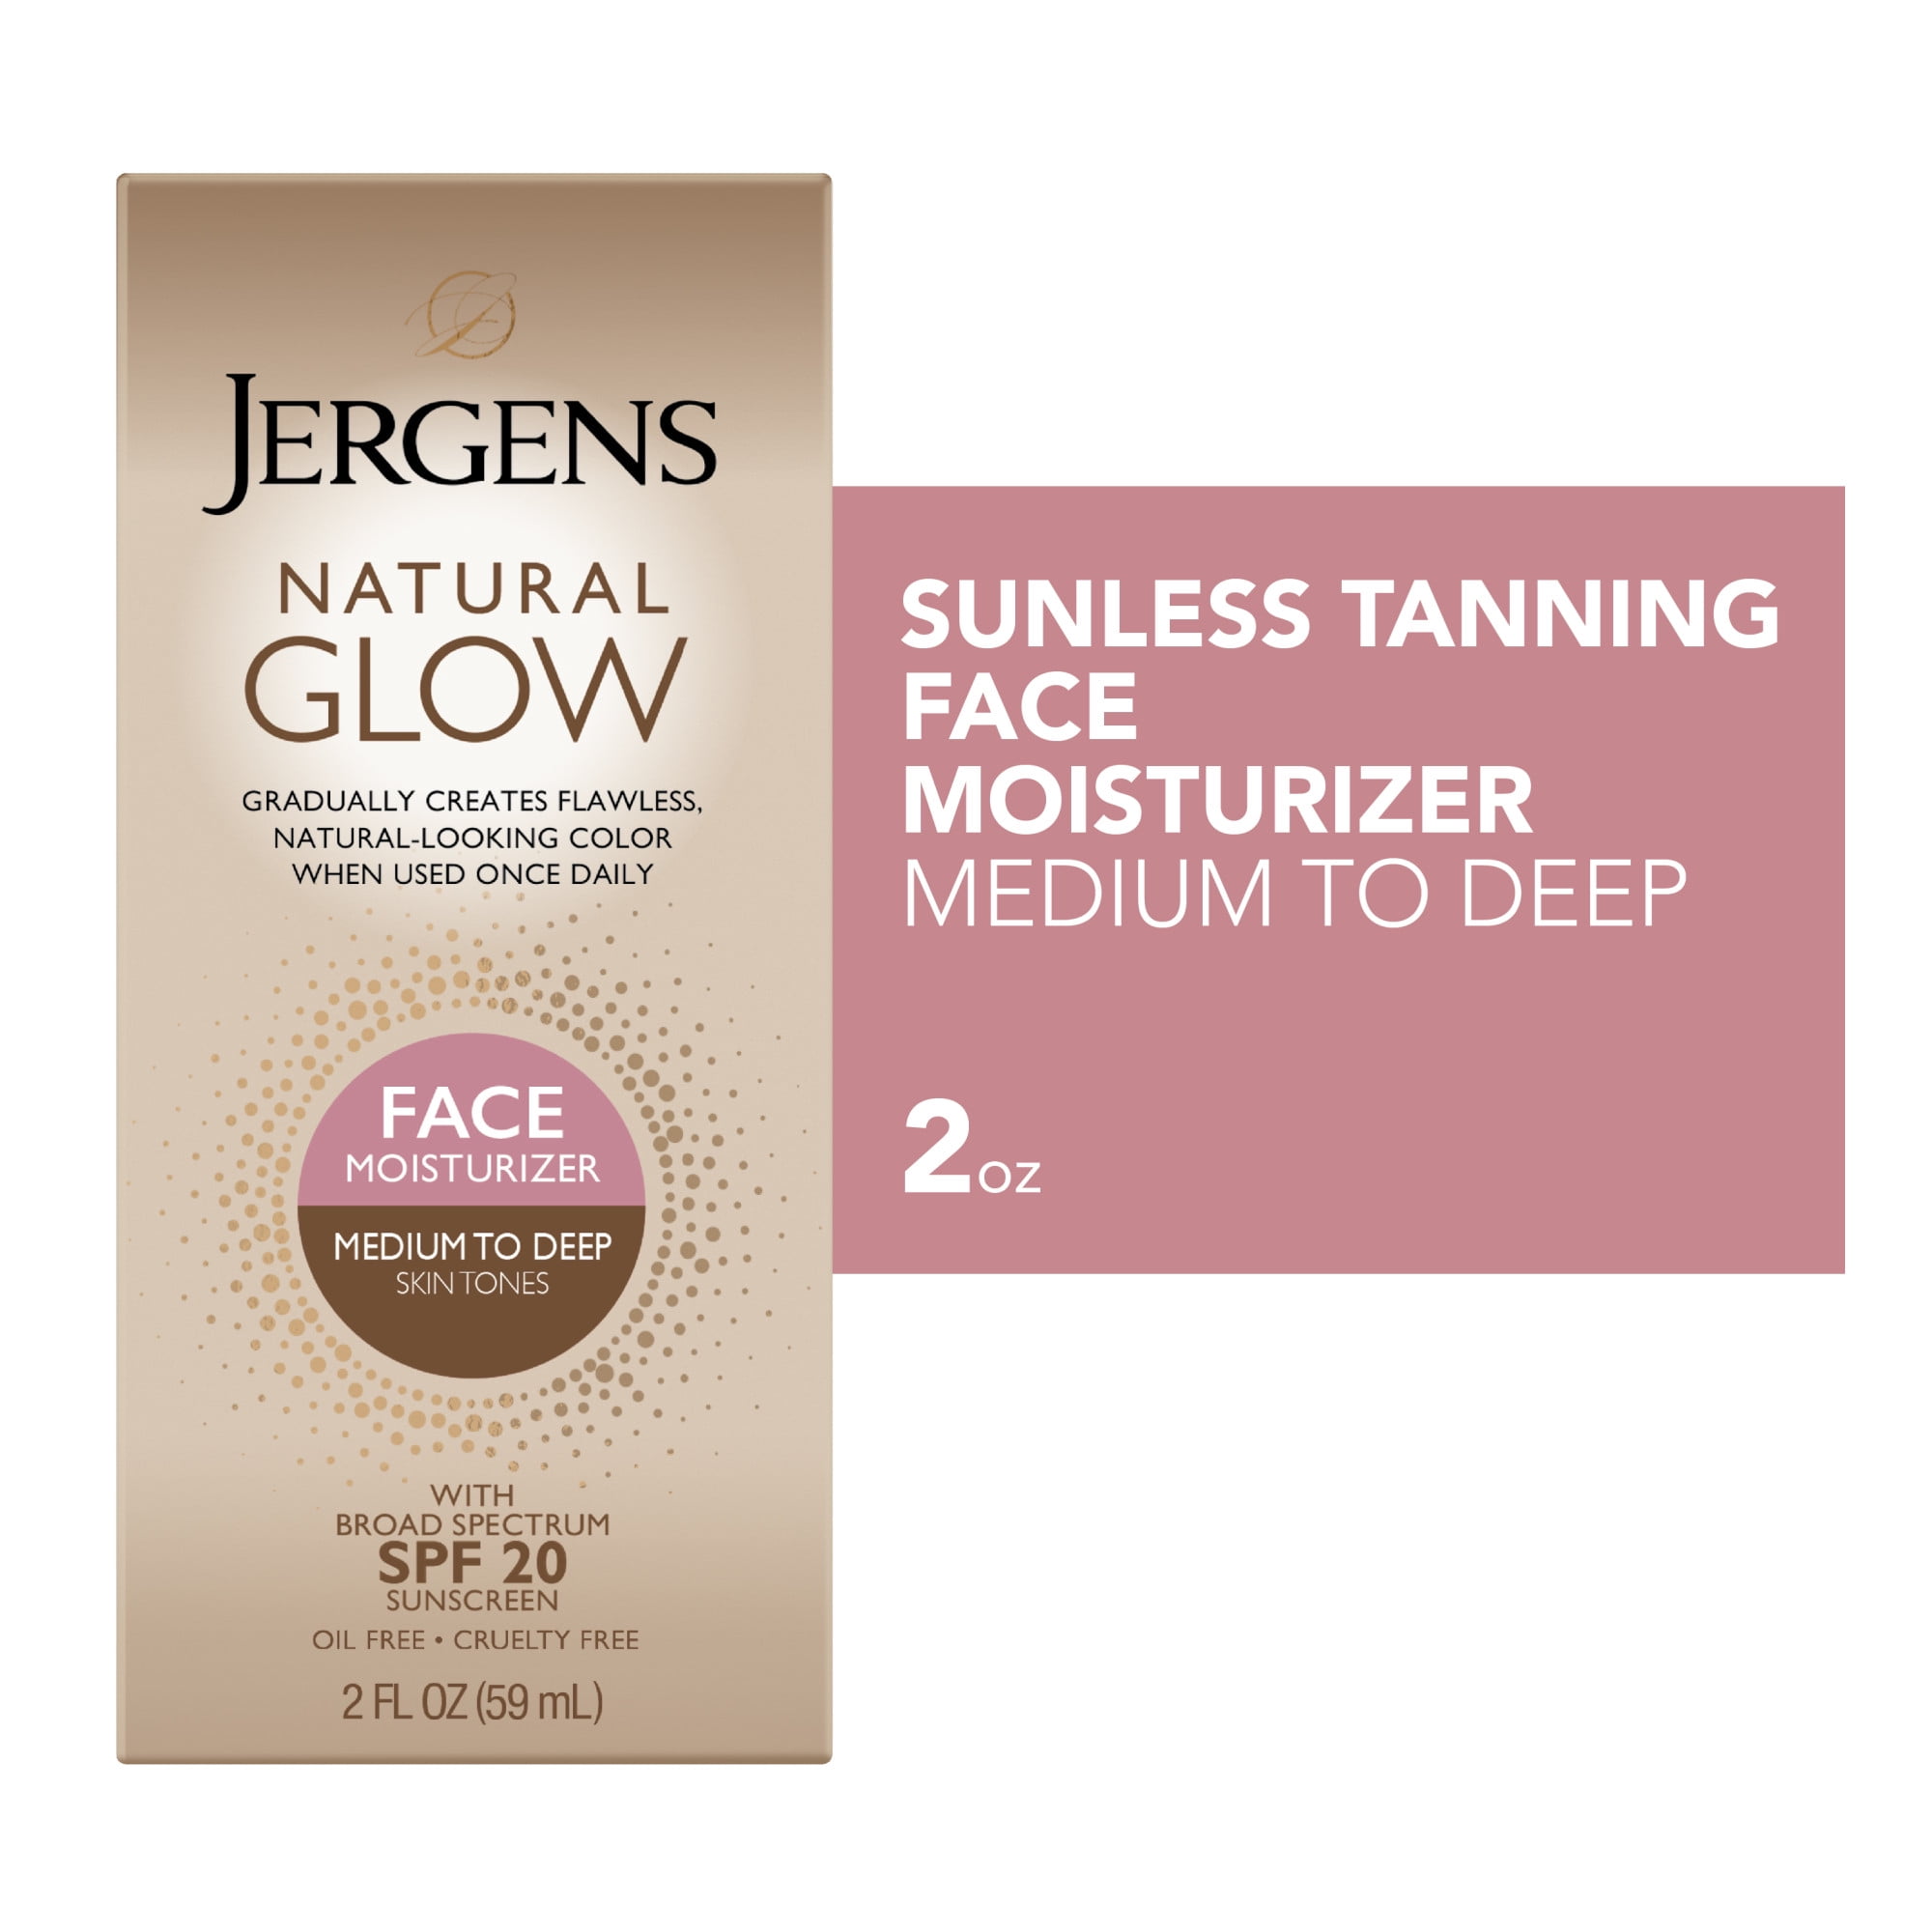 Jergens Natural Glow Sunless Tanning Face Moisturizer Lotion for Medium to Deep Skin Tones, SPF 20, 2 fl oz